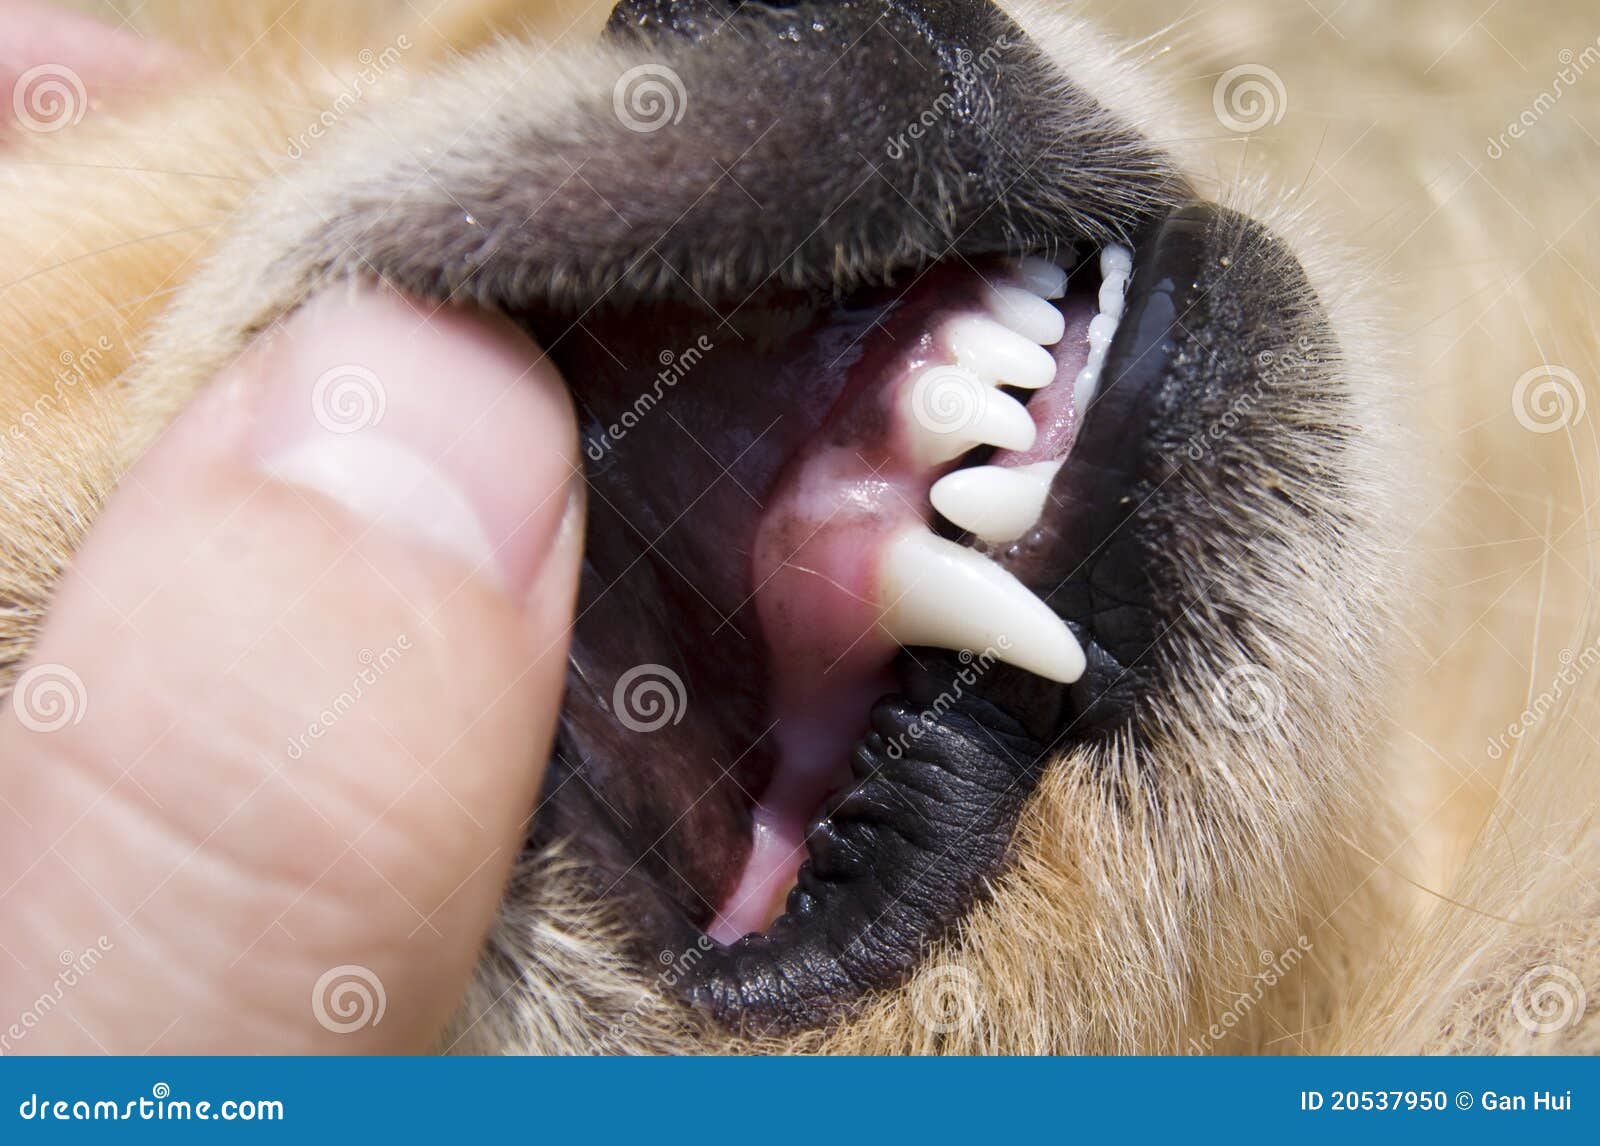 dog teeth detail in hand